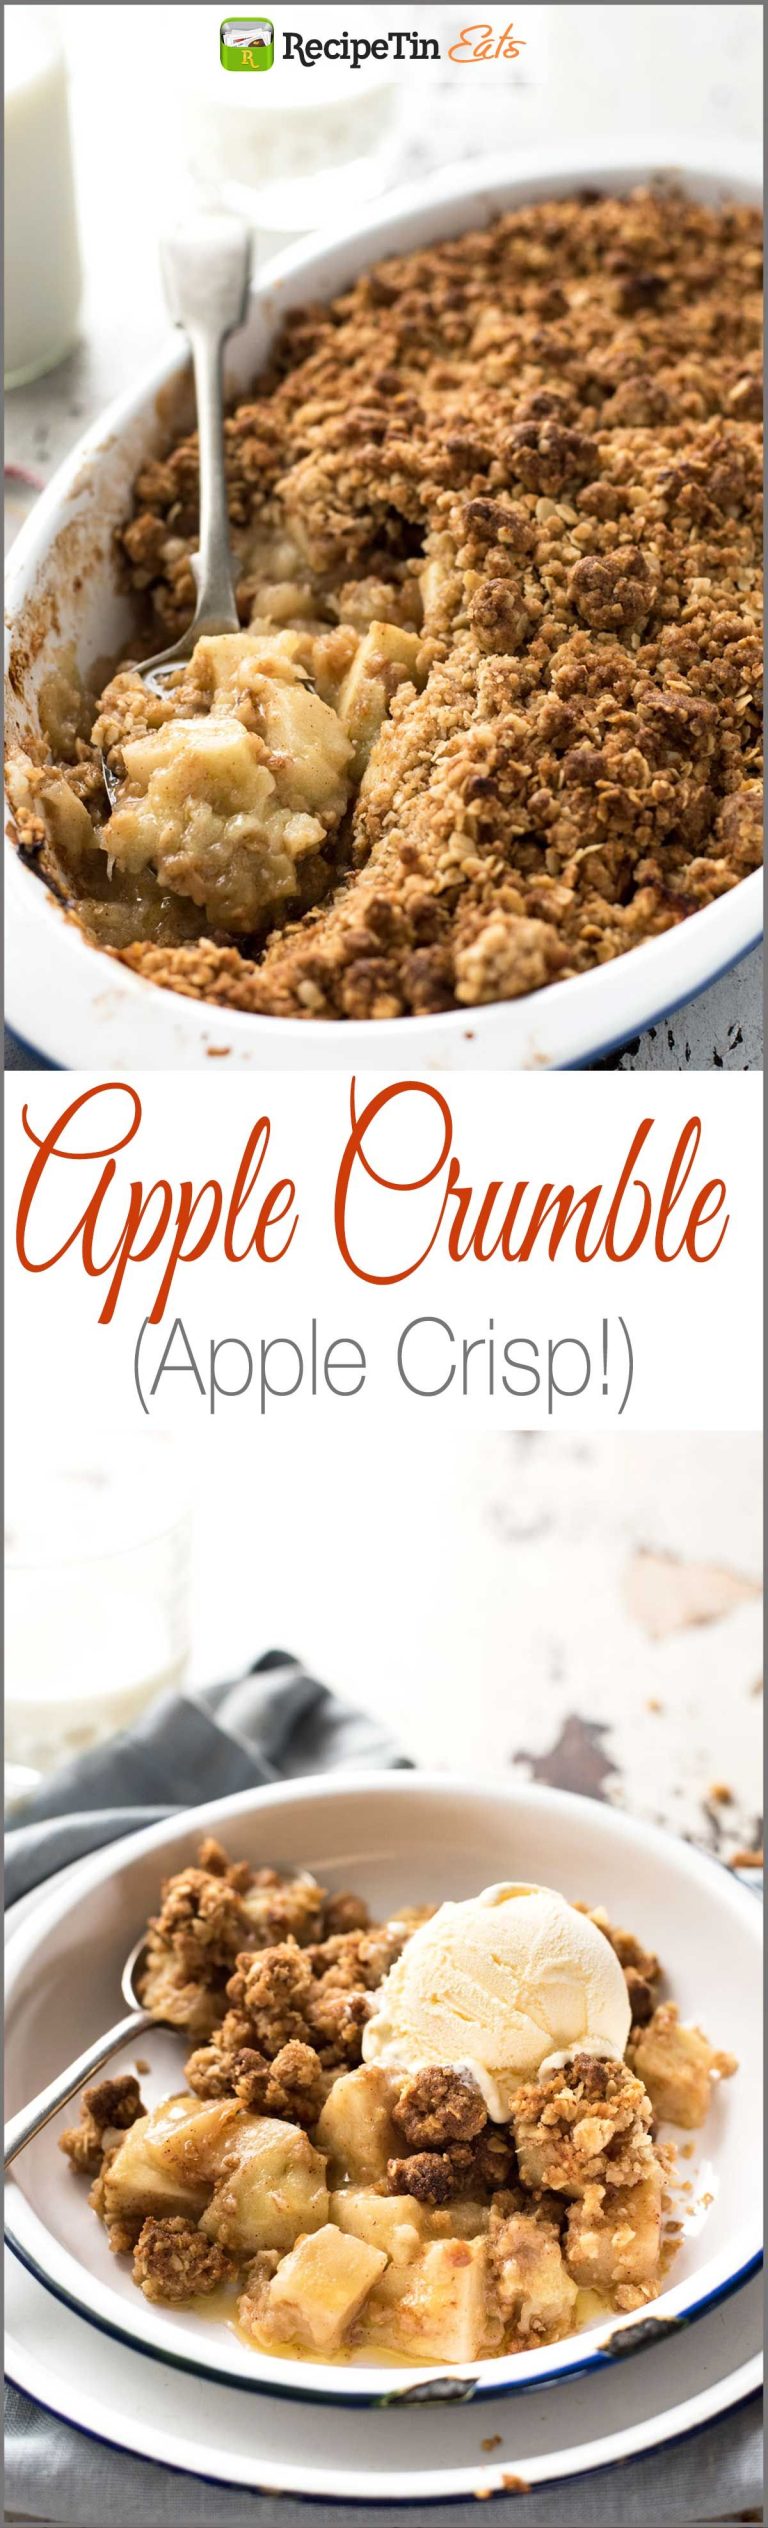 Best Apple Crumble Recipe